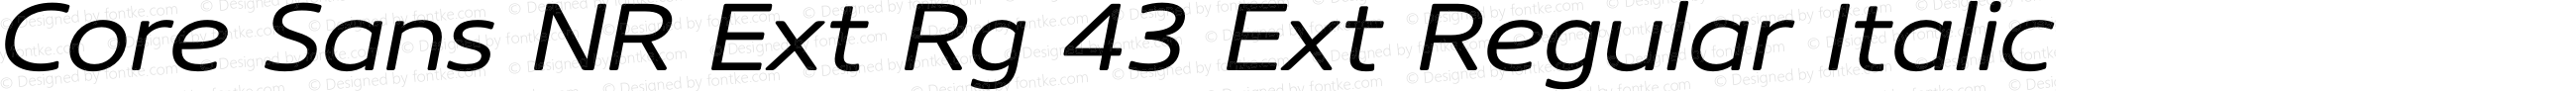 Core Sans NR 43 Ext Regular Italic